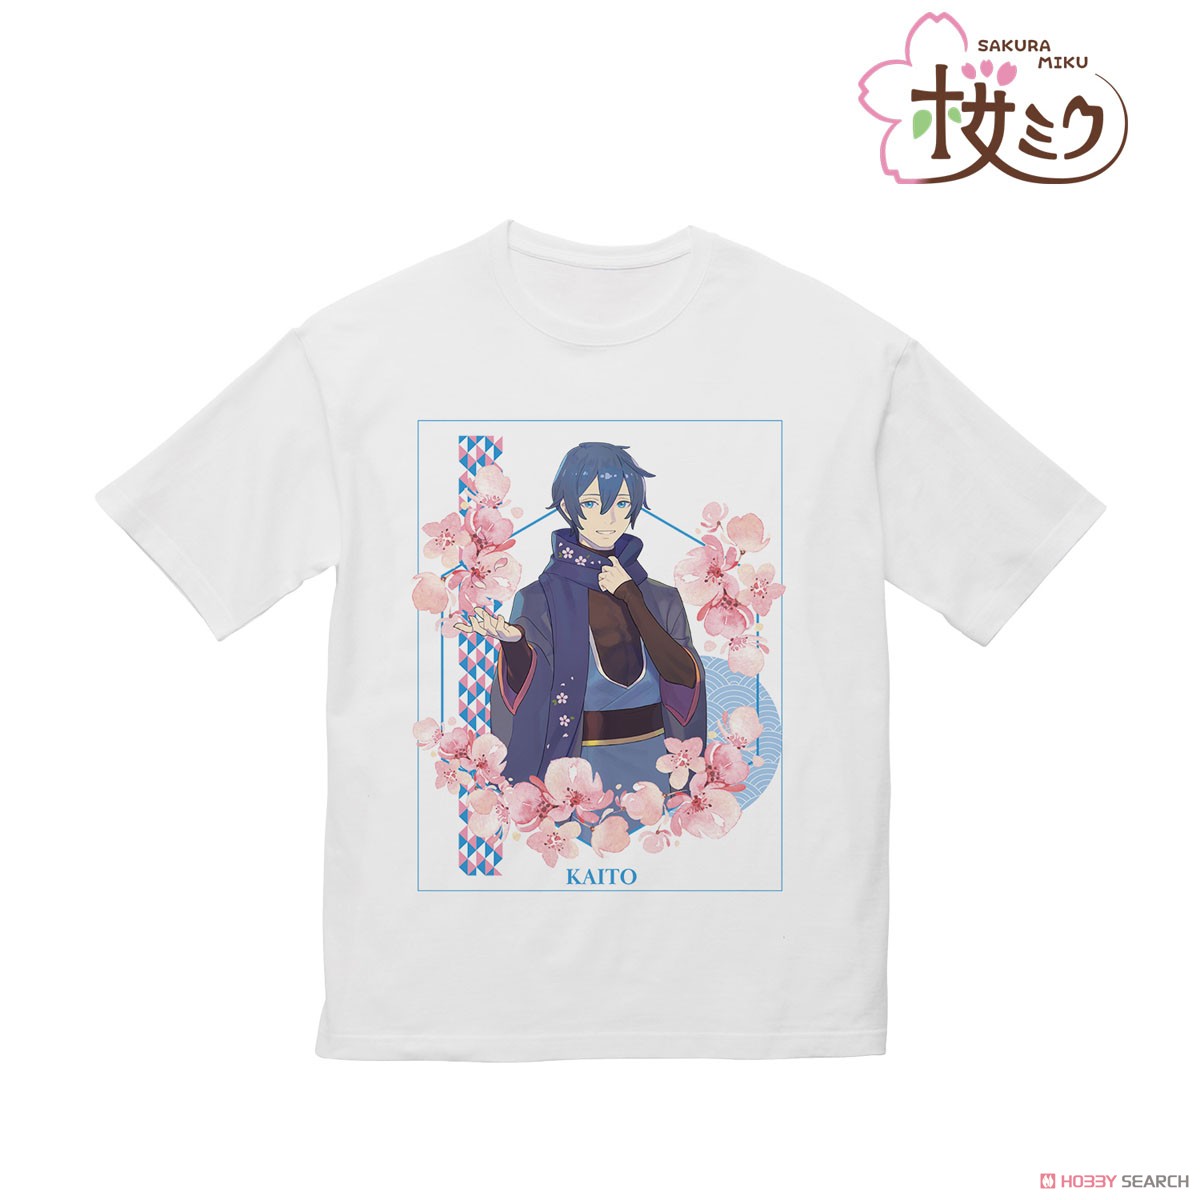 Sakura Miku [Especially Illustrated] Kaito Art by Kuro Big Silhouette T-Shirt Unisex S (Anime Toy) Item picture1